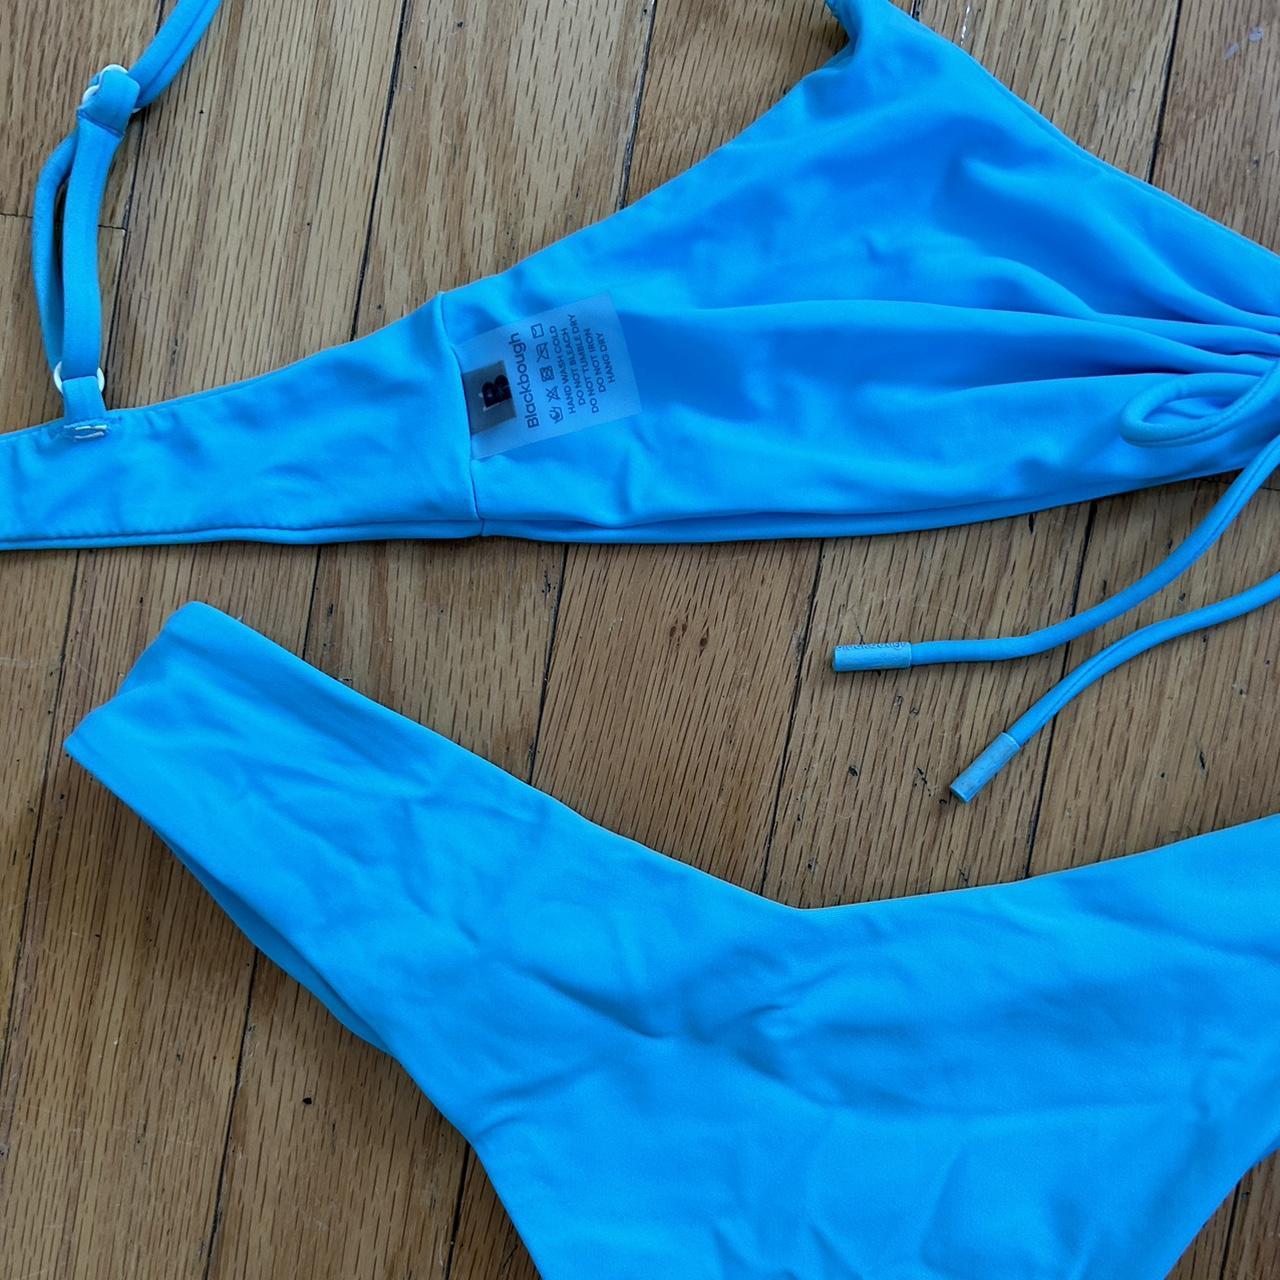 Kulani Kinis Women's Blue Bikinis-and-tankini-sets | Depop